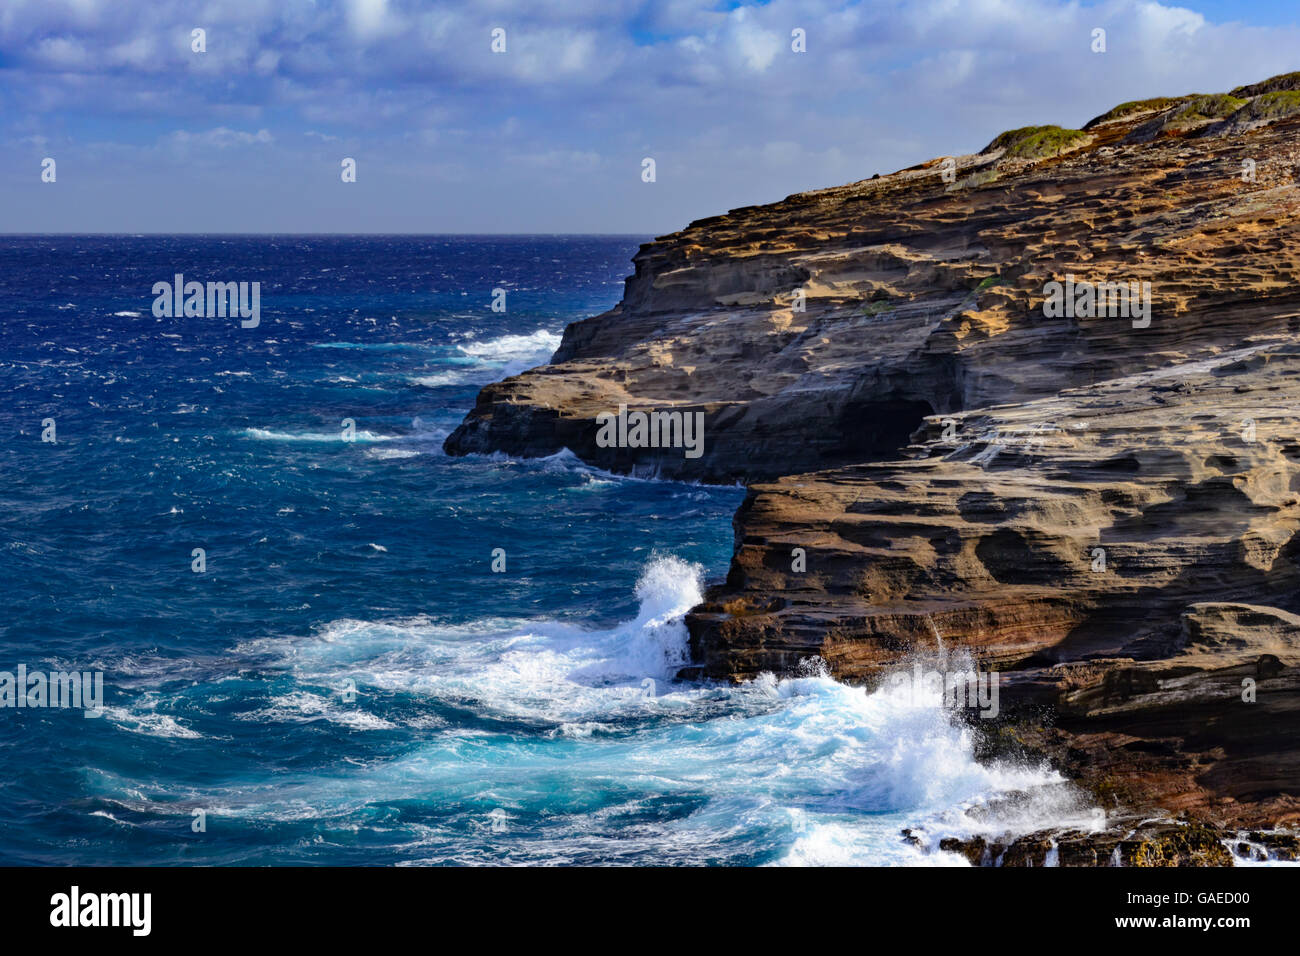 Ocean Waves Crashing against rocks and cliffs. Splashing, foamy water course textured rocks Stock Photo